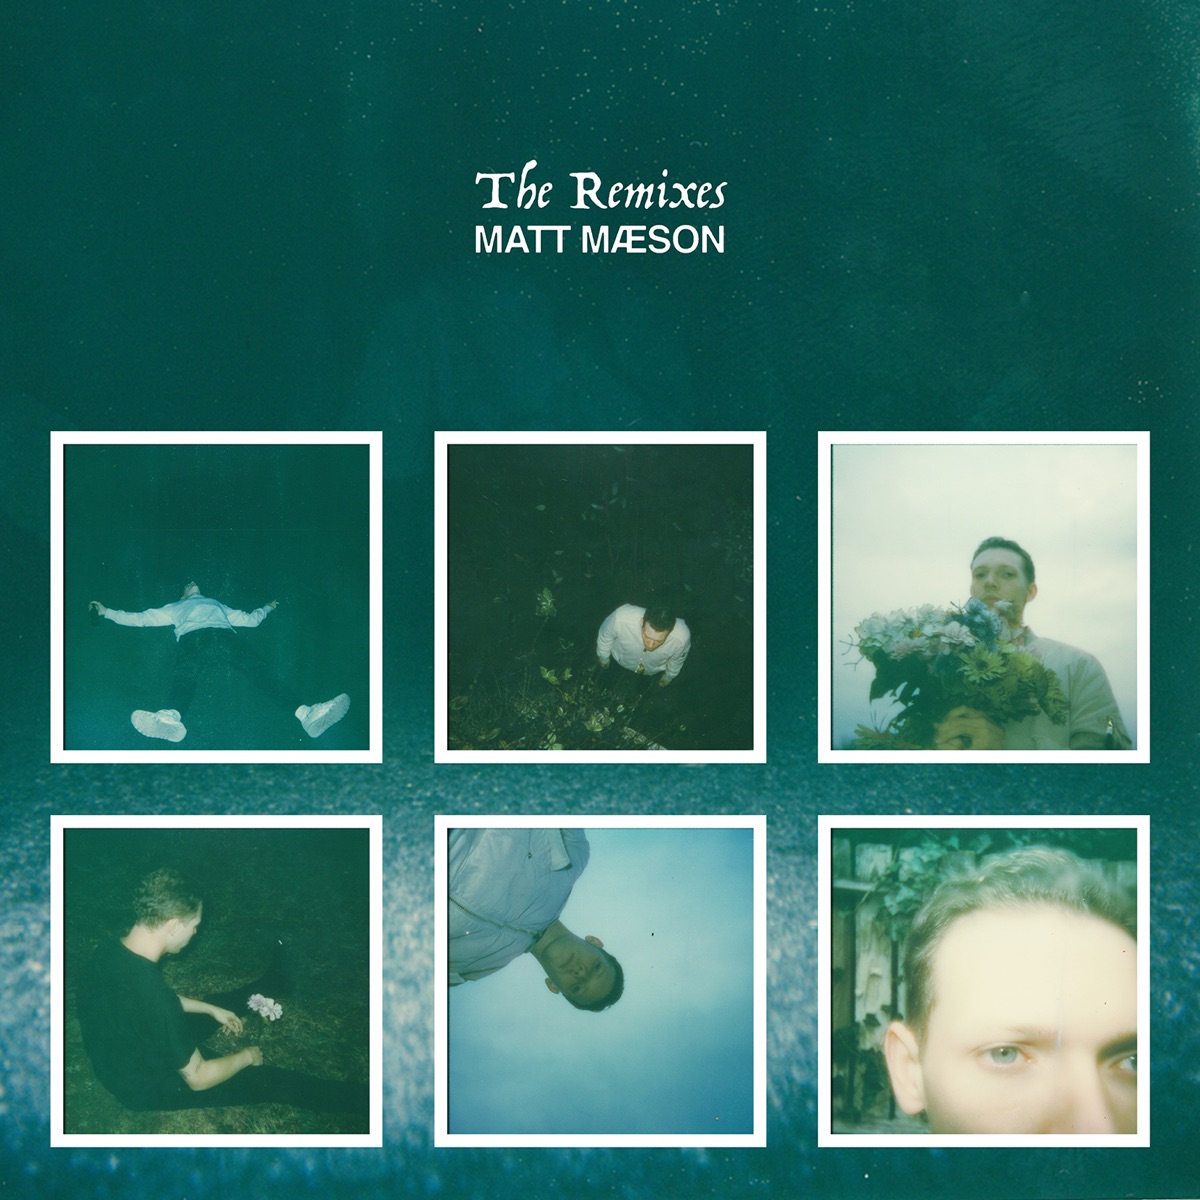 Never Had to Leave - Album by Matt Maeson - Apple Music